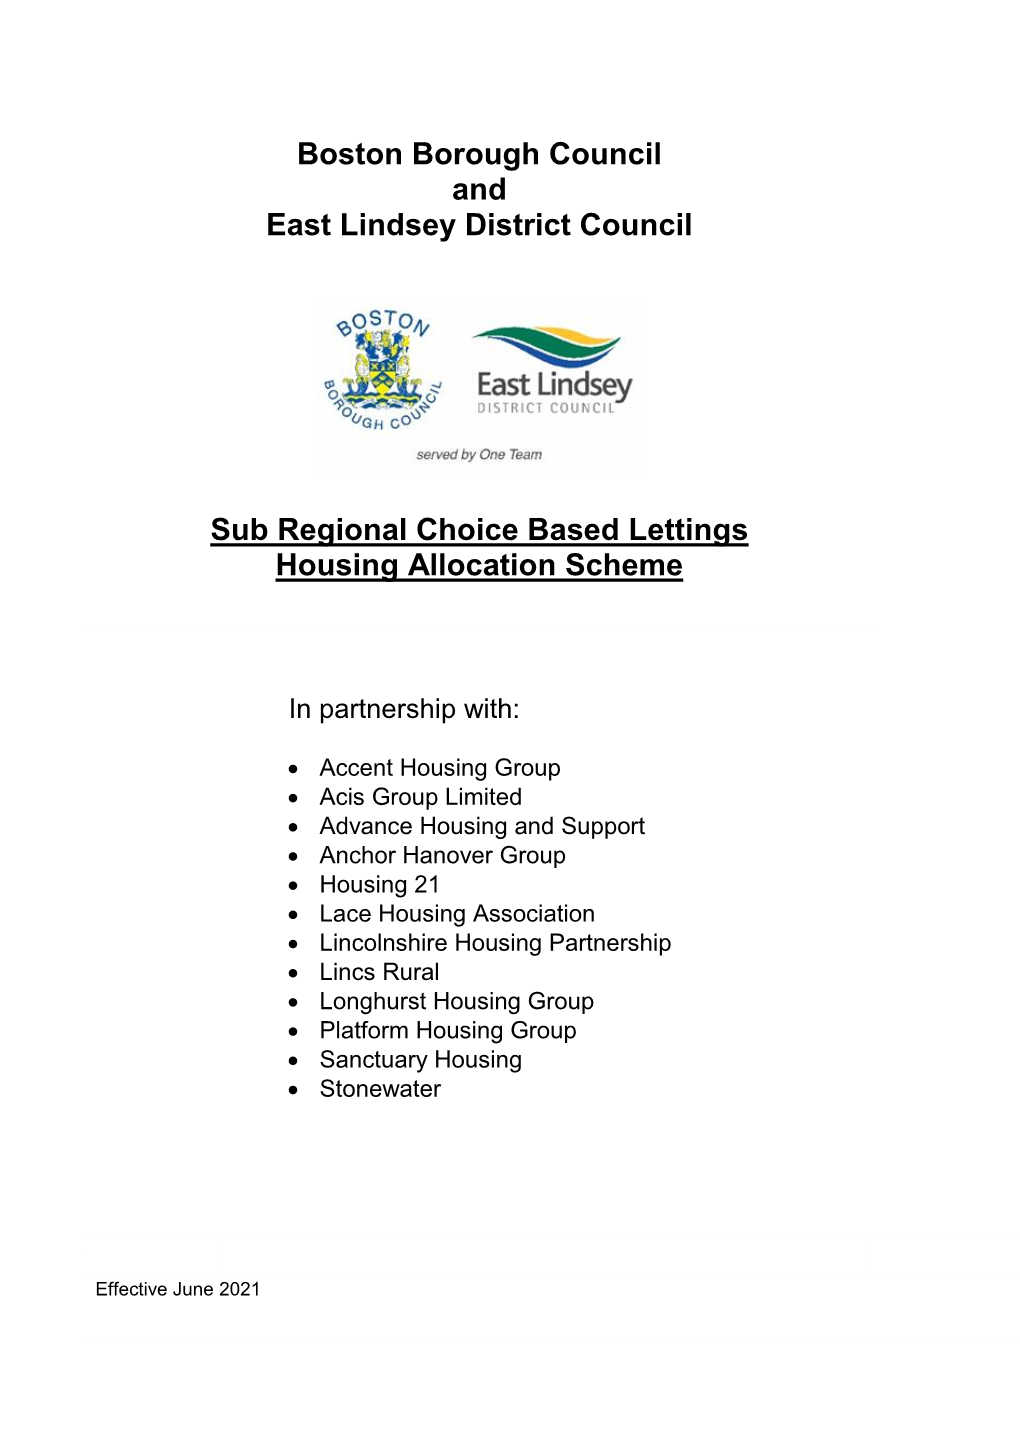 East Lindsey District Council – Housing Allocation Scheme